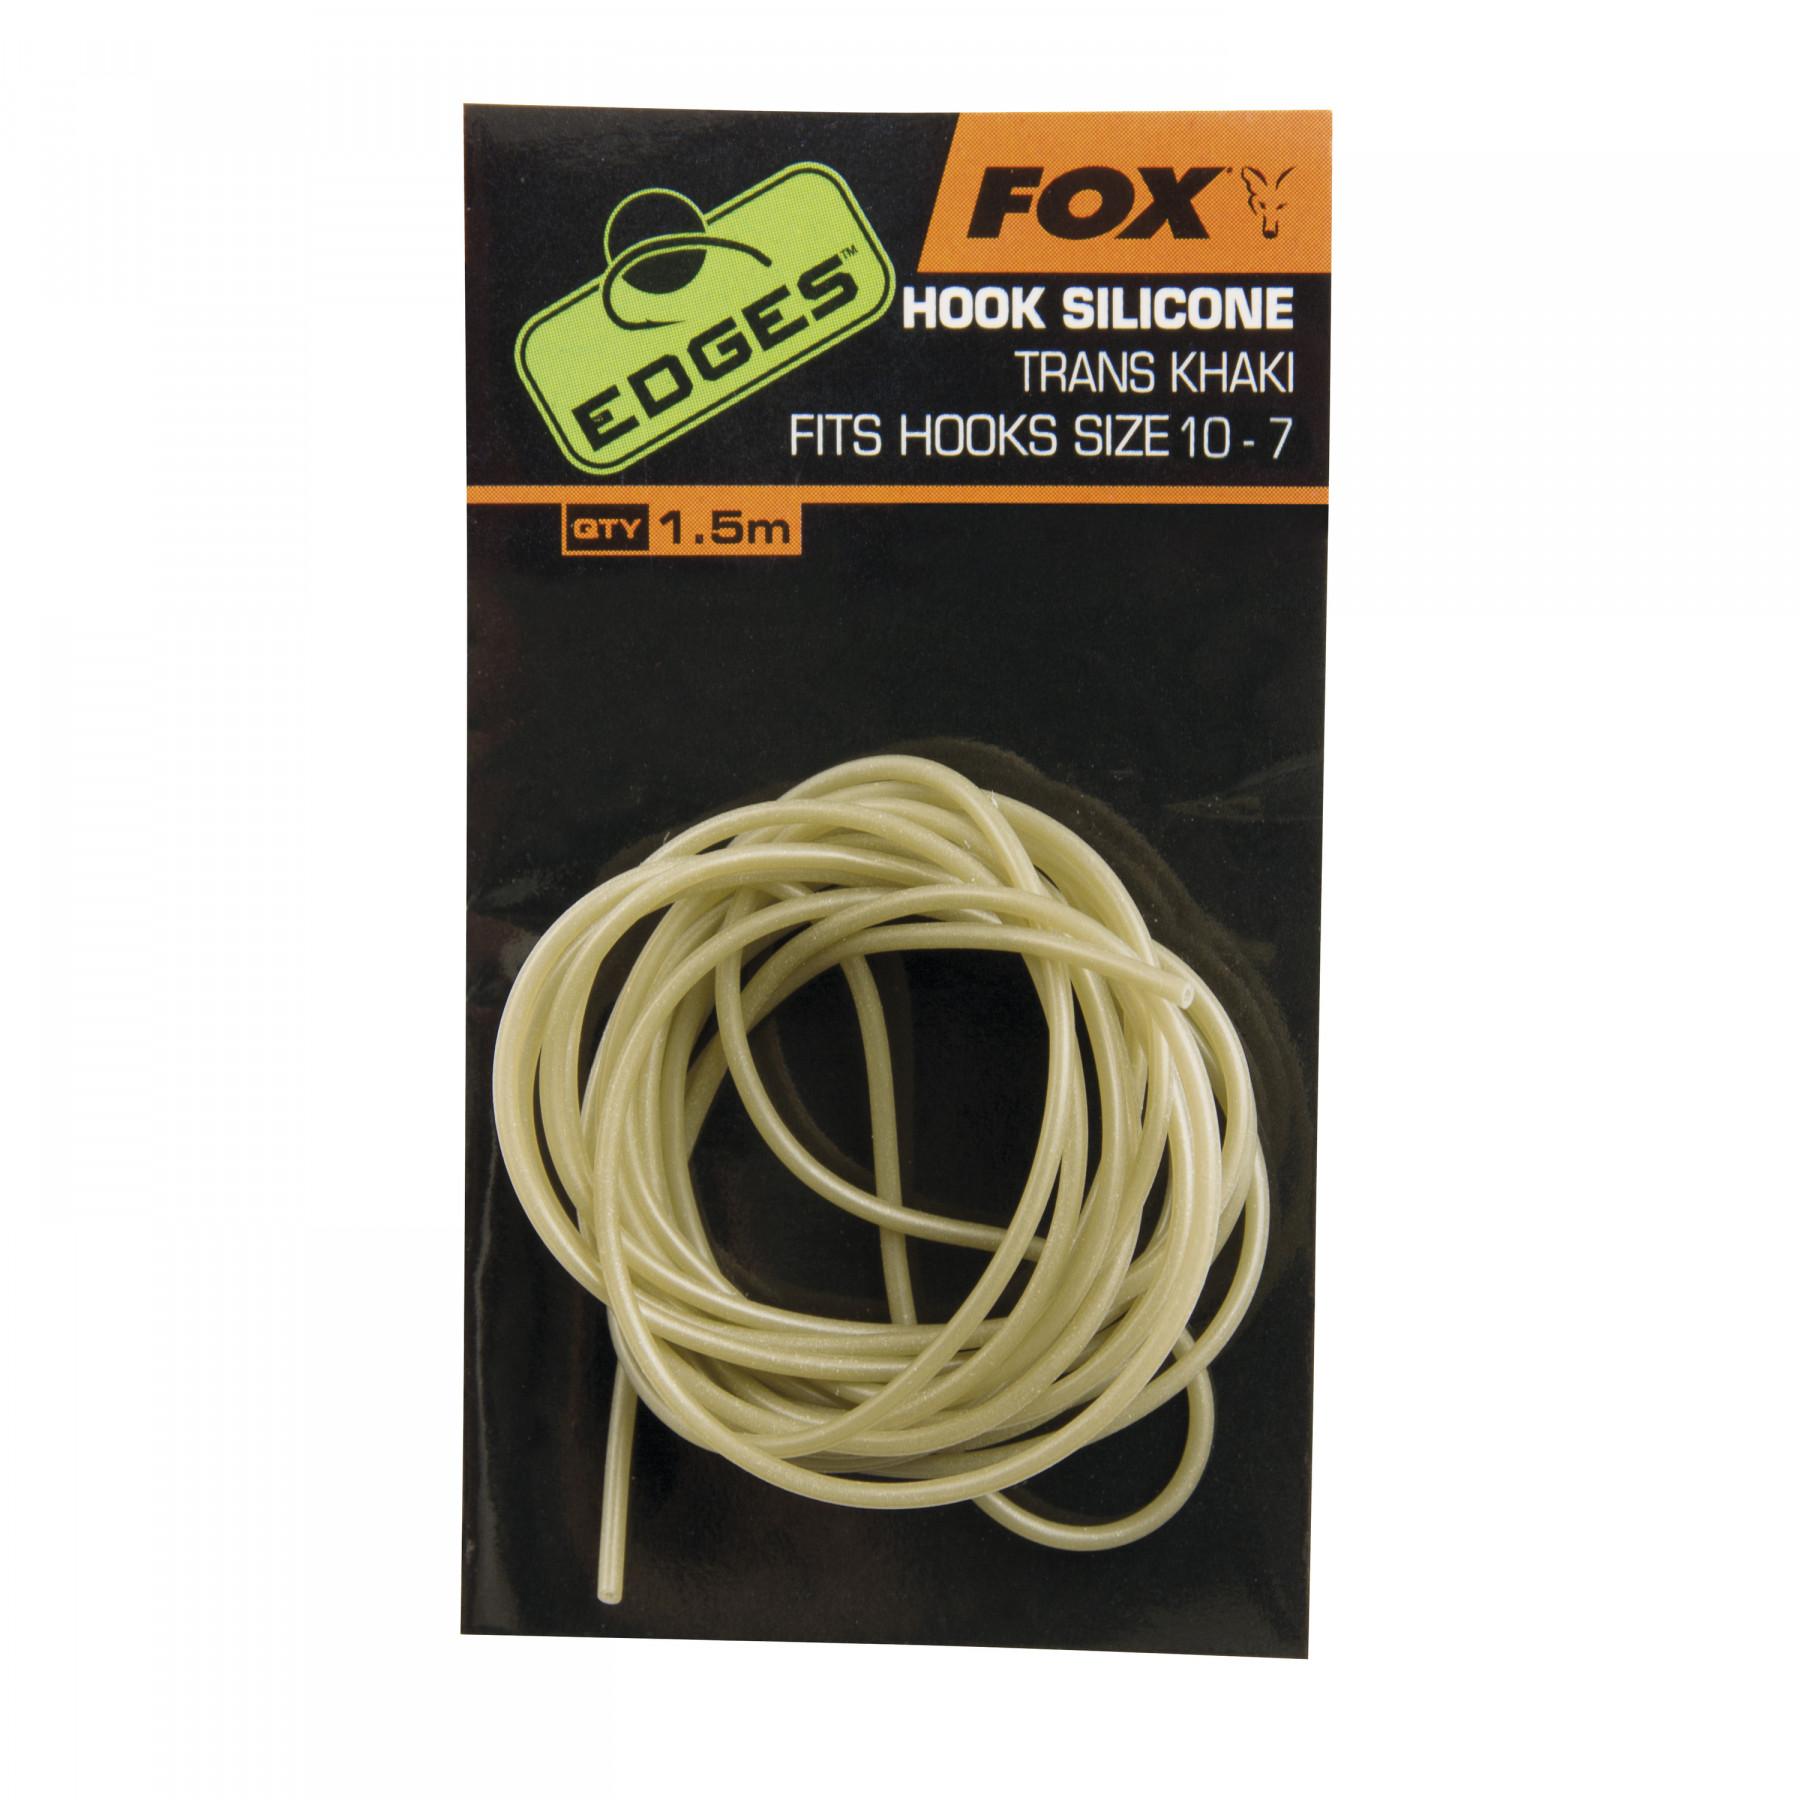 Hållare av silikon Fox 10 7Khaki Hook Edges